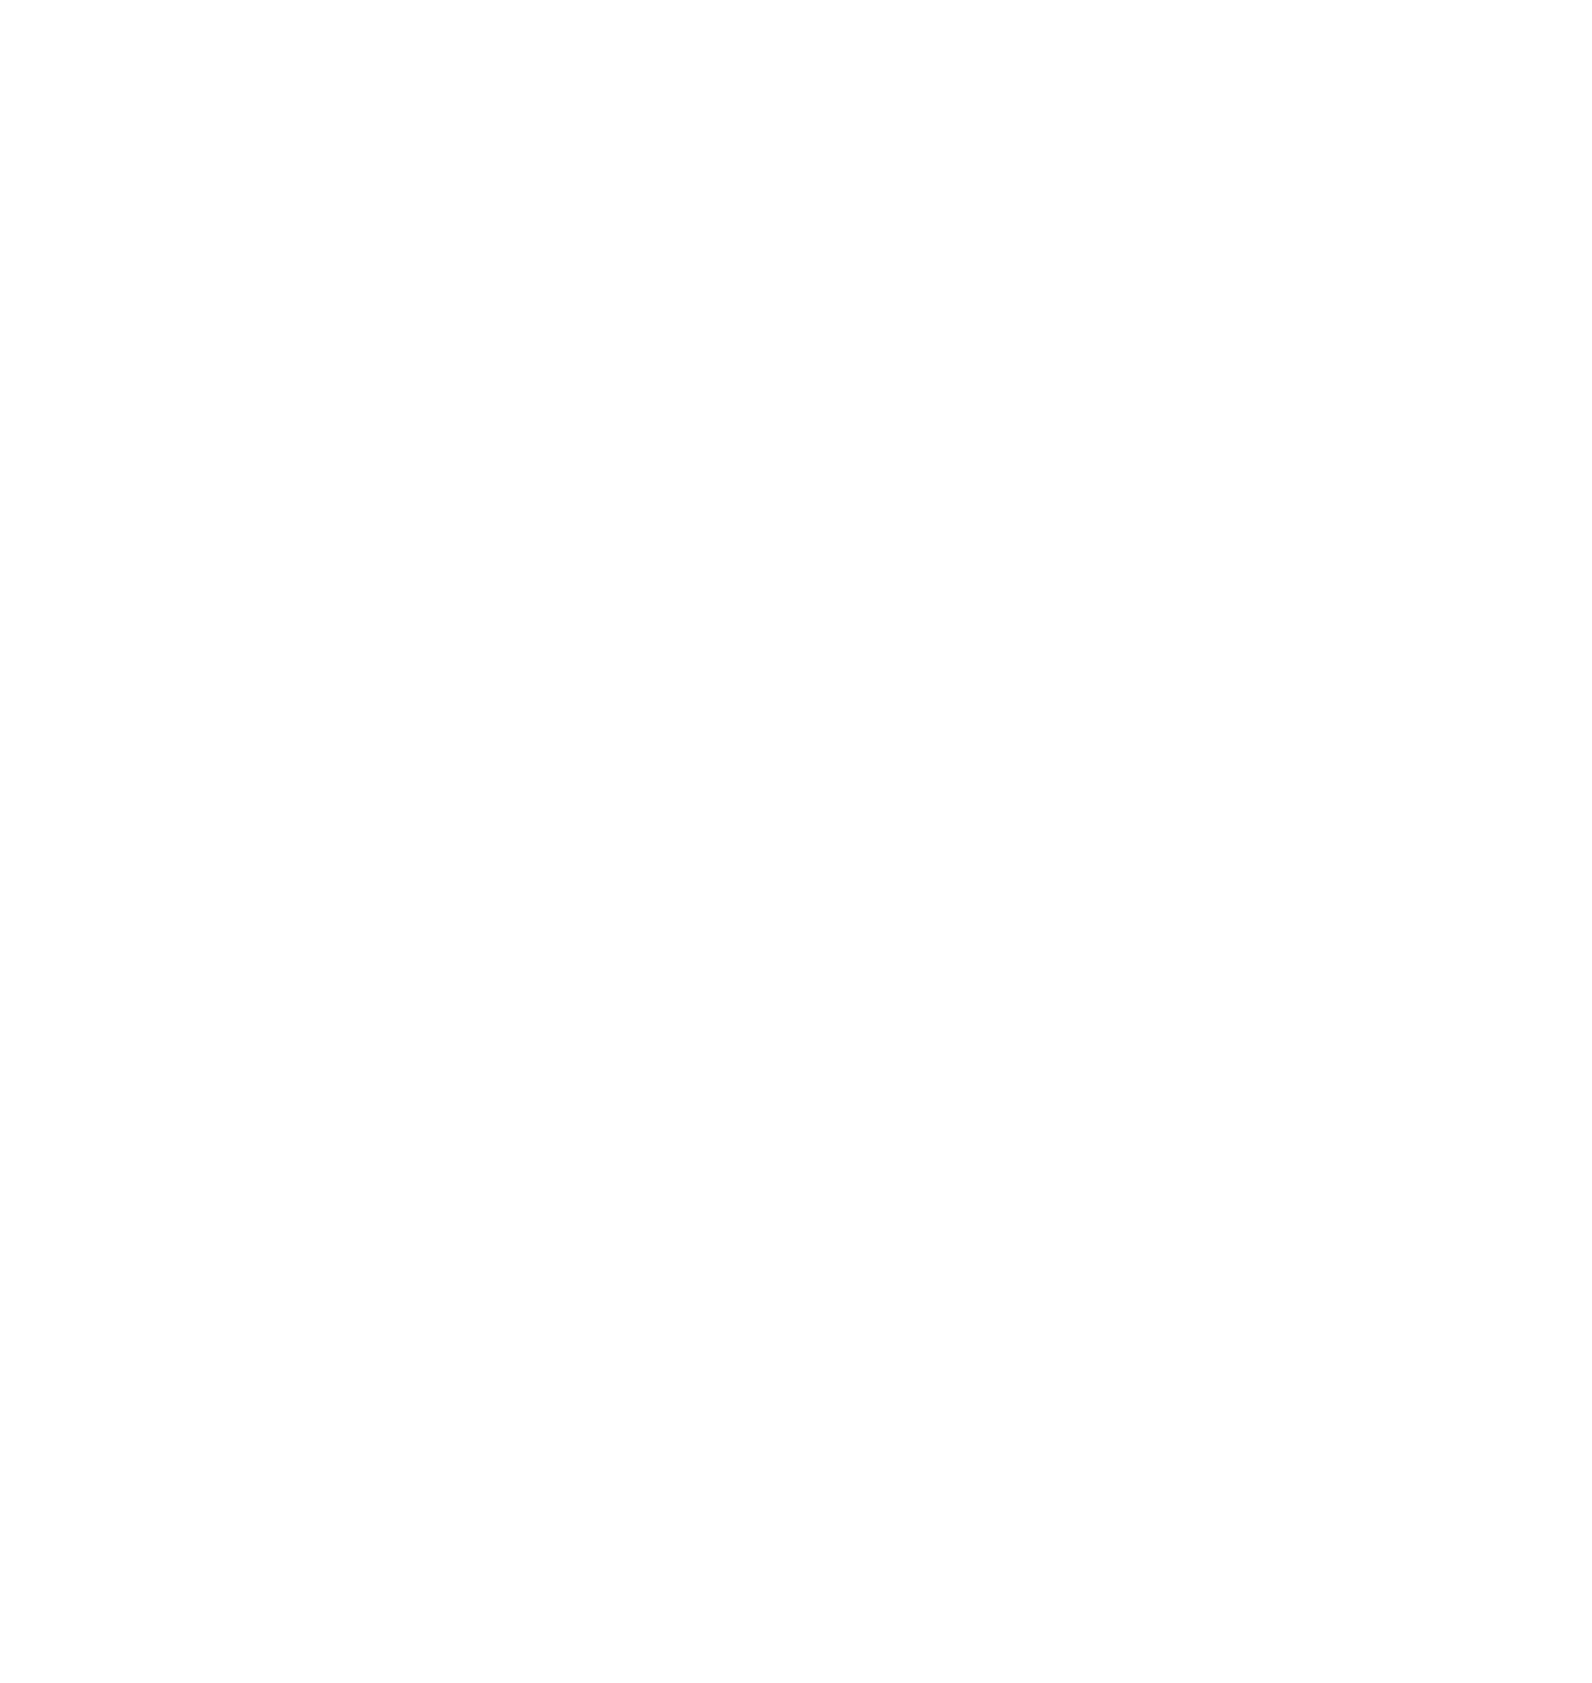 Unimicron logo for dark backgrounds (transparent PNG)